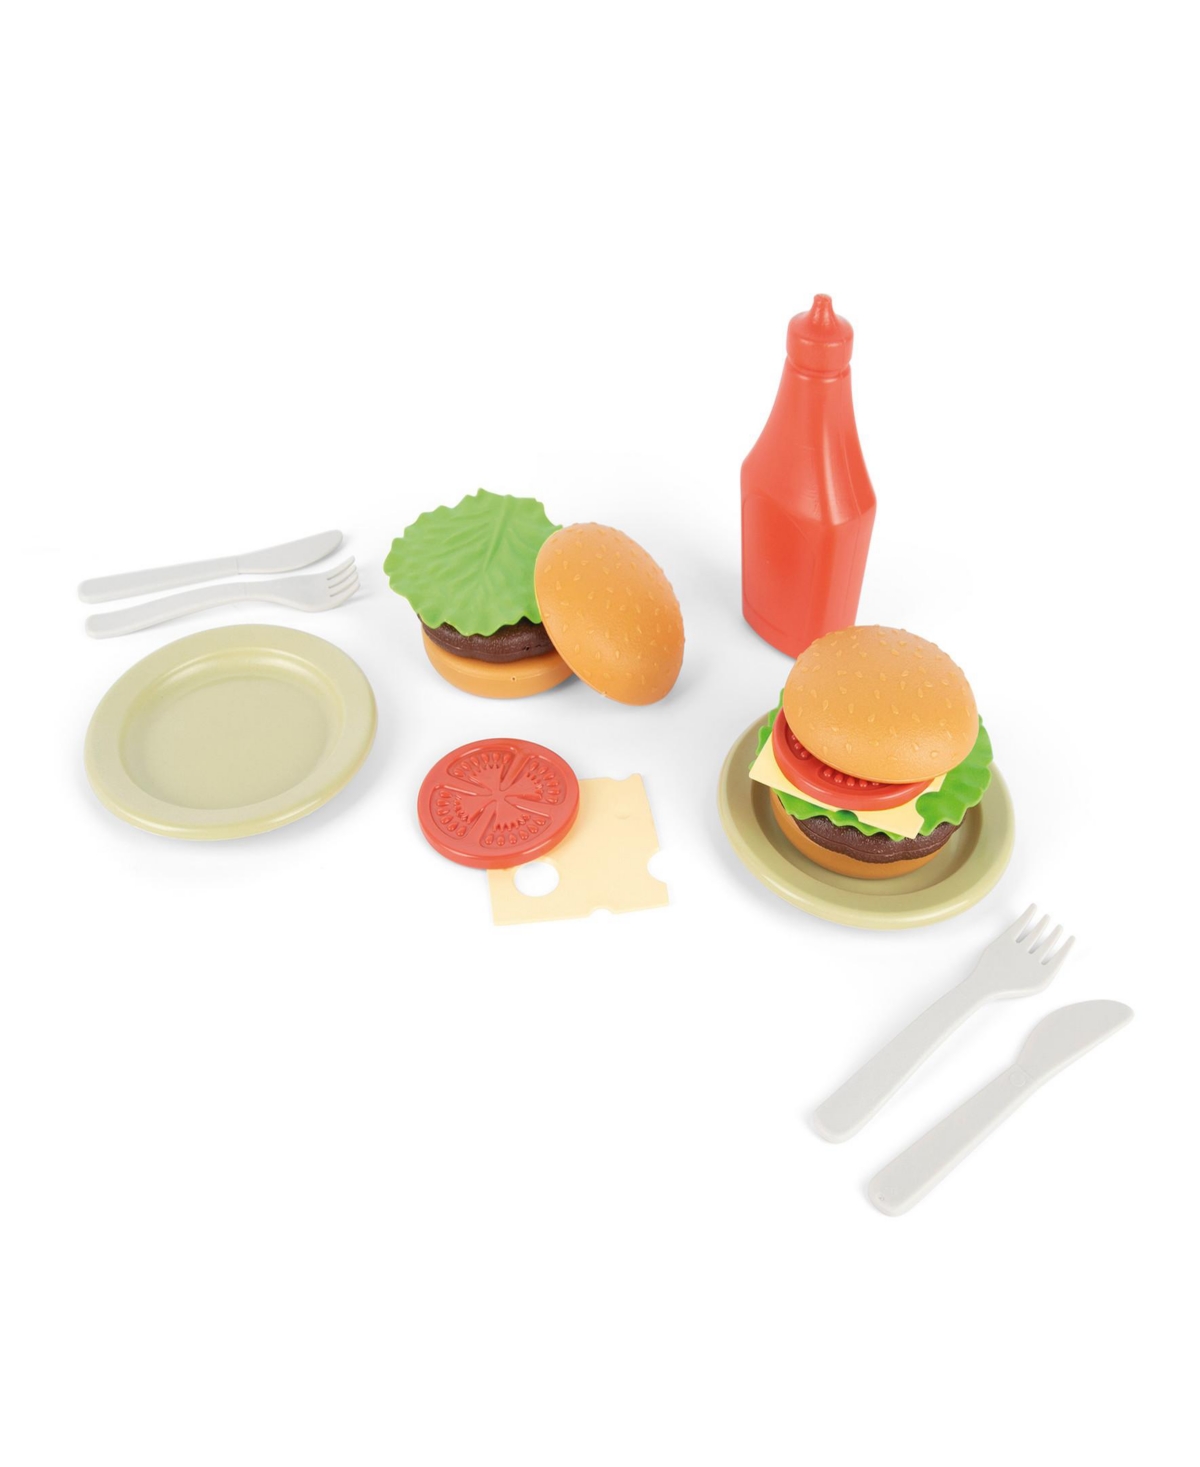 Dantoy Babies' Bio Burger Play Food Playset In Multi